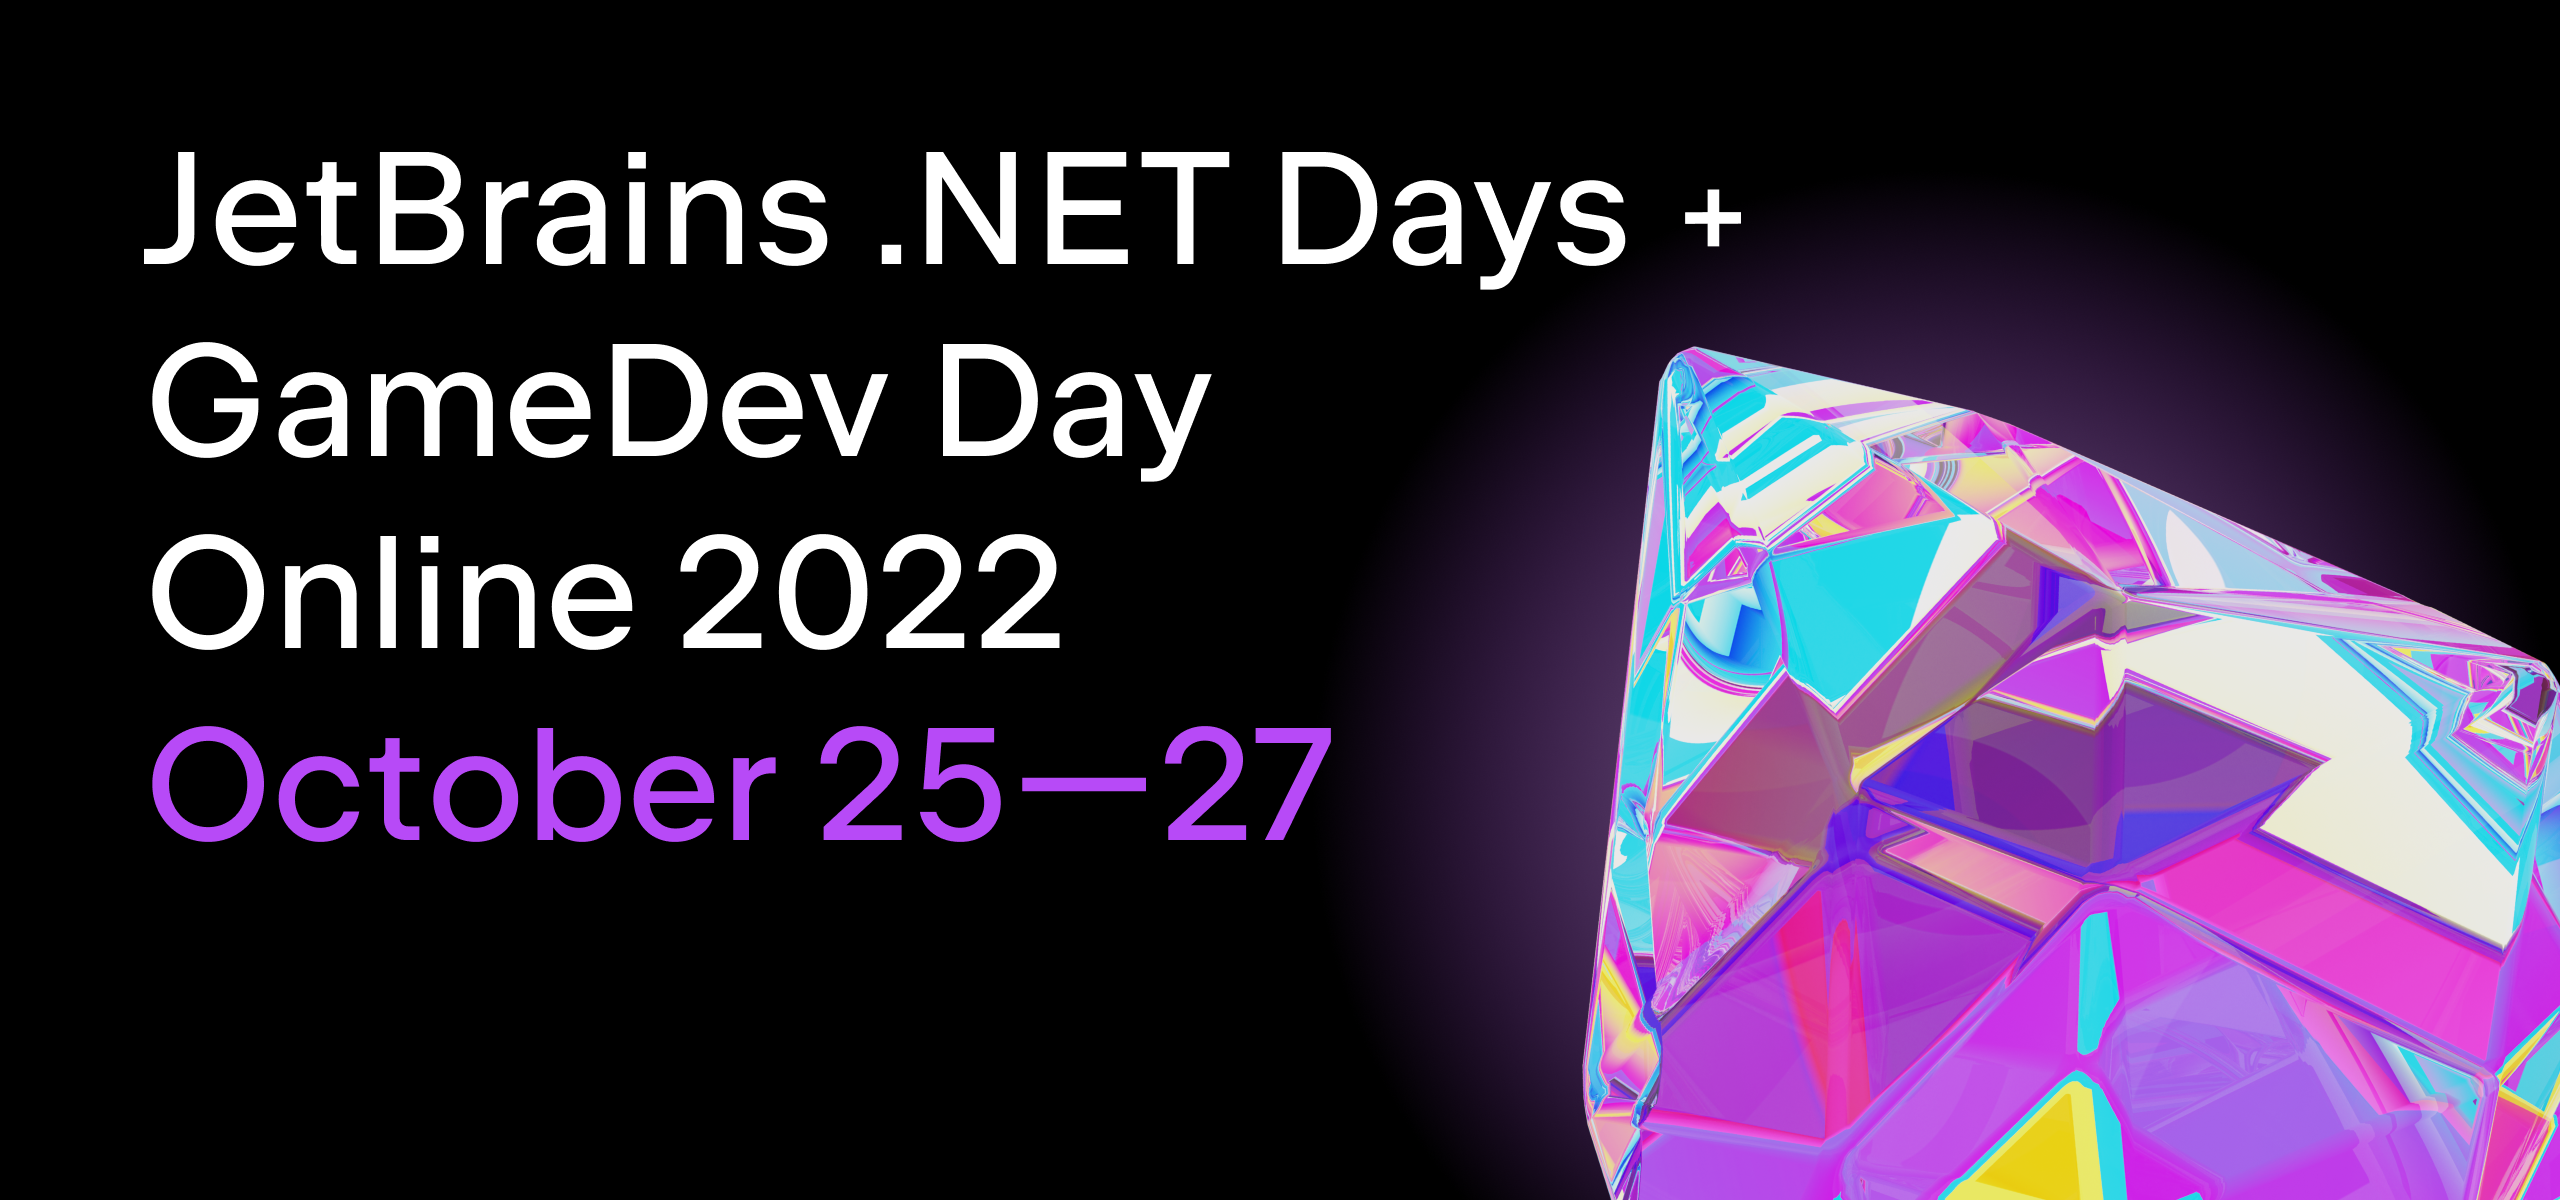 JetBrains .NET Days + GameDev Day Online 2022